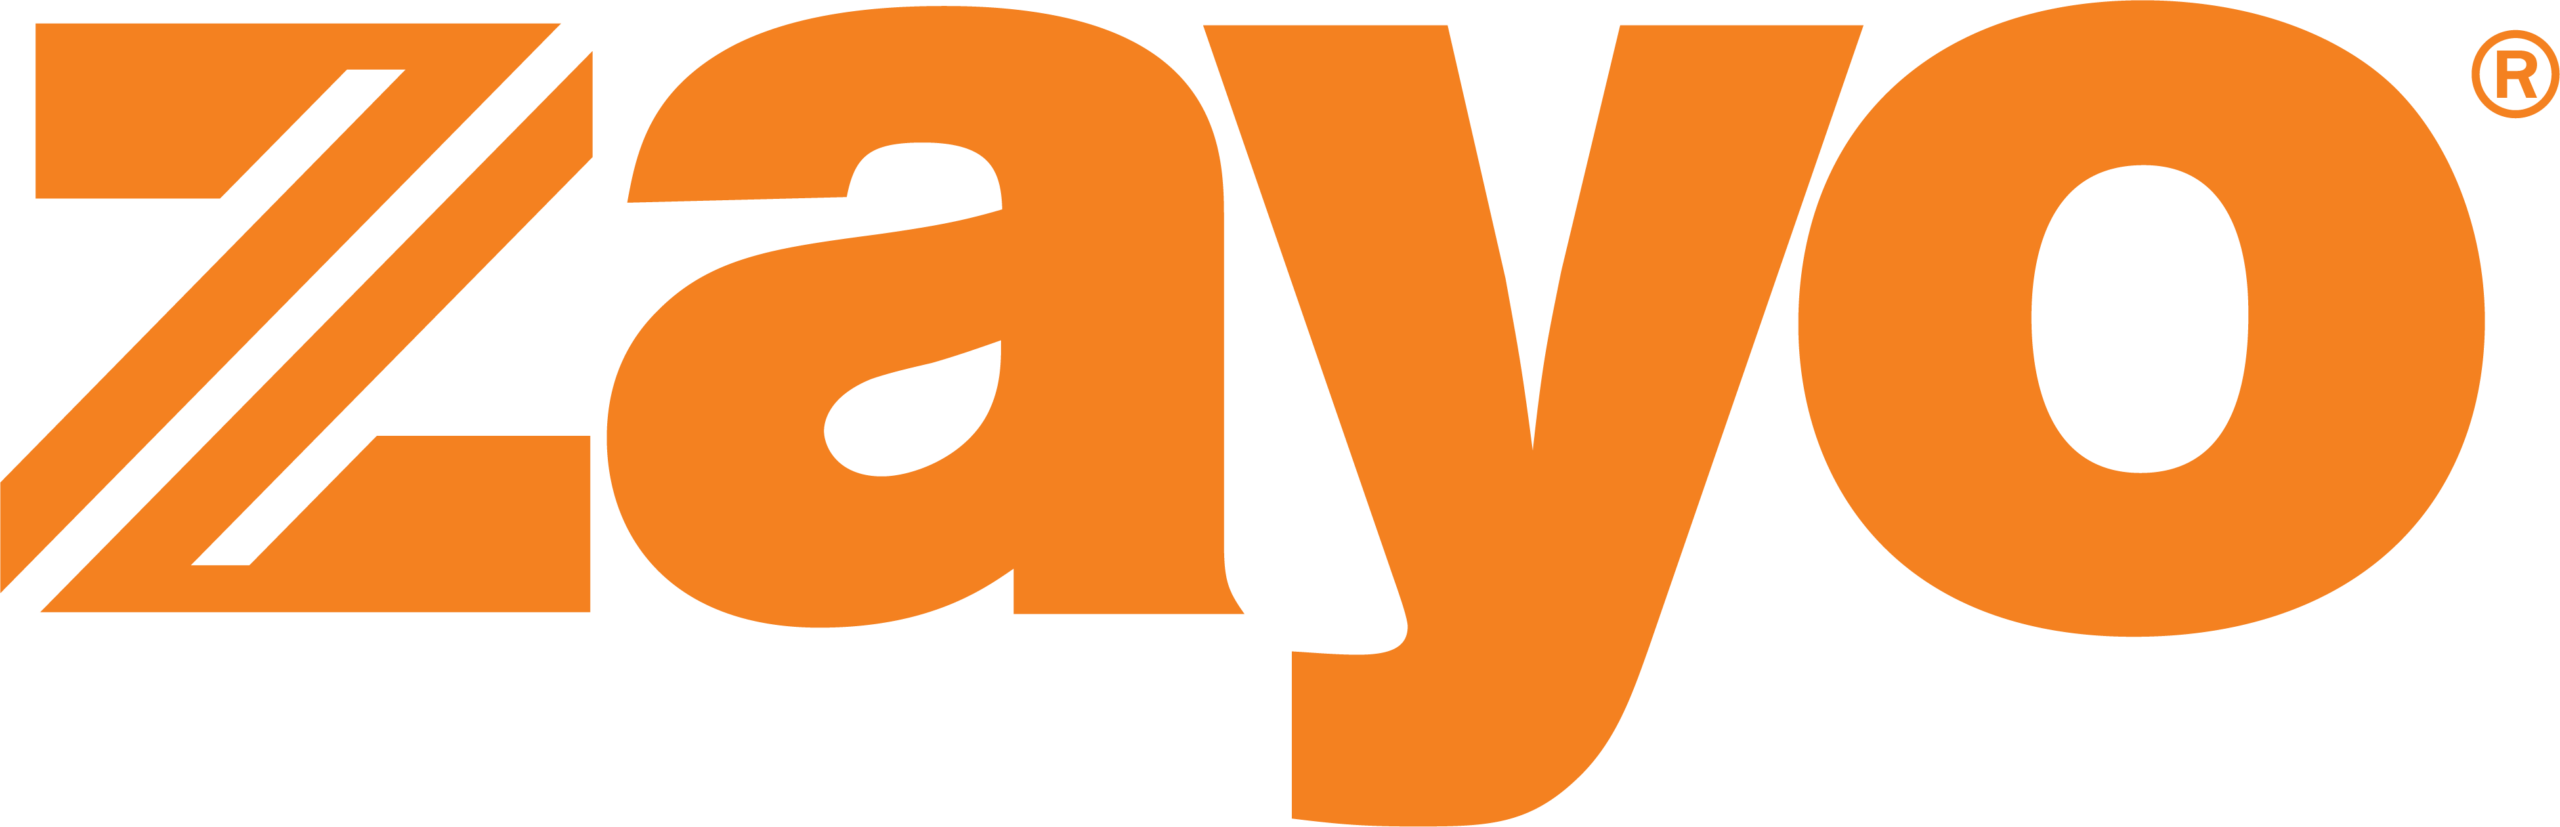 zayo-logo-orange (3) (1)